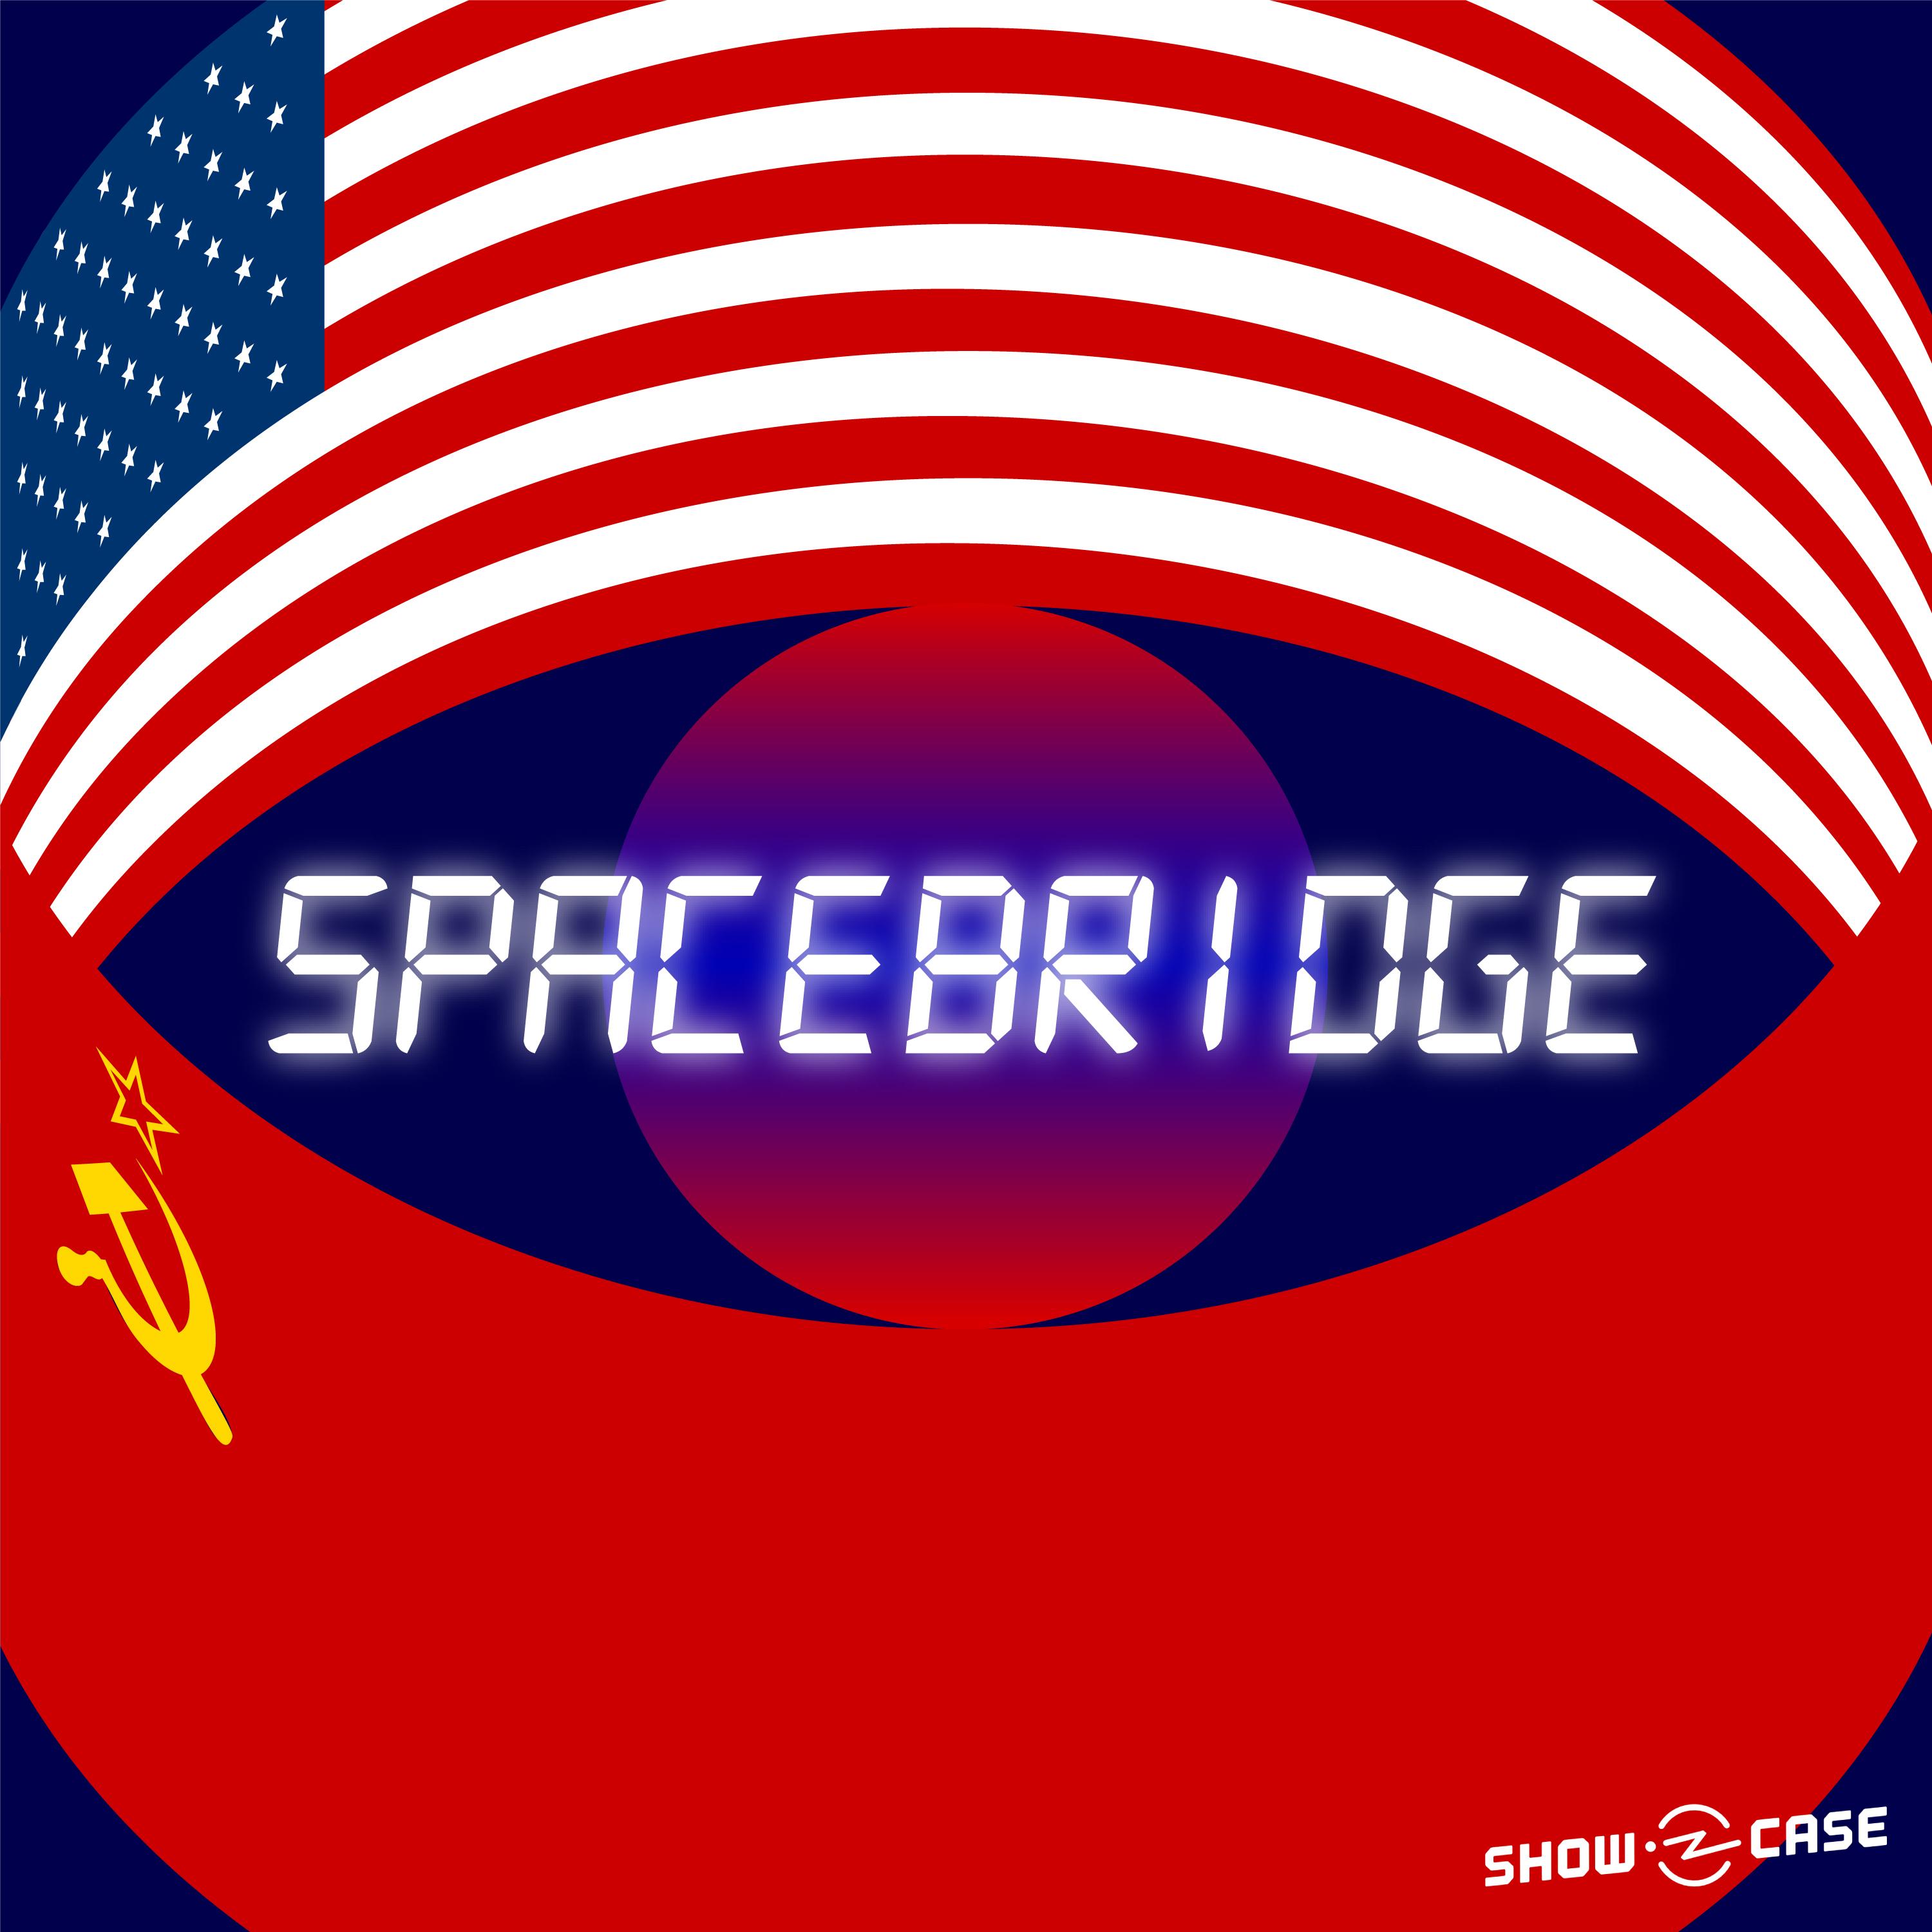 Thumbnail for "Spacebridge #1 – Hidden Human Reserves".